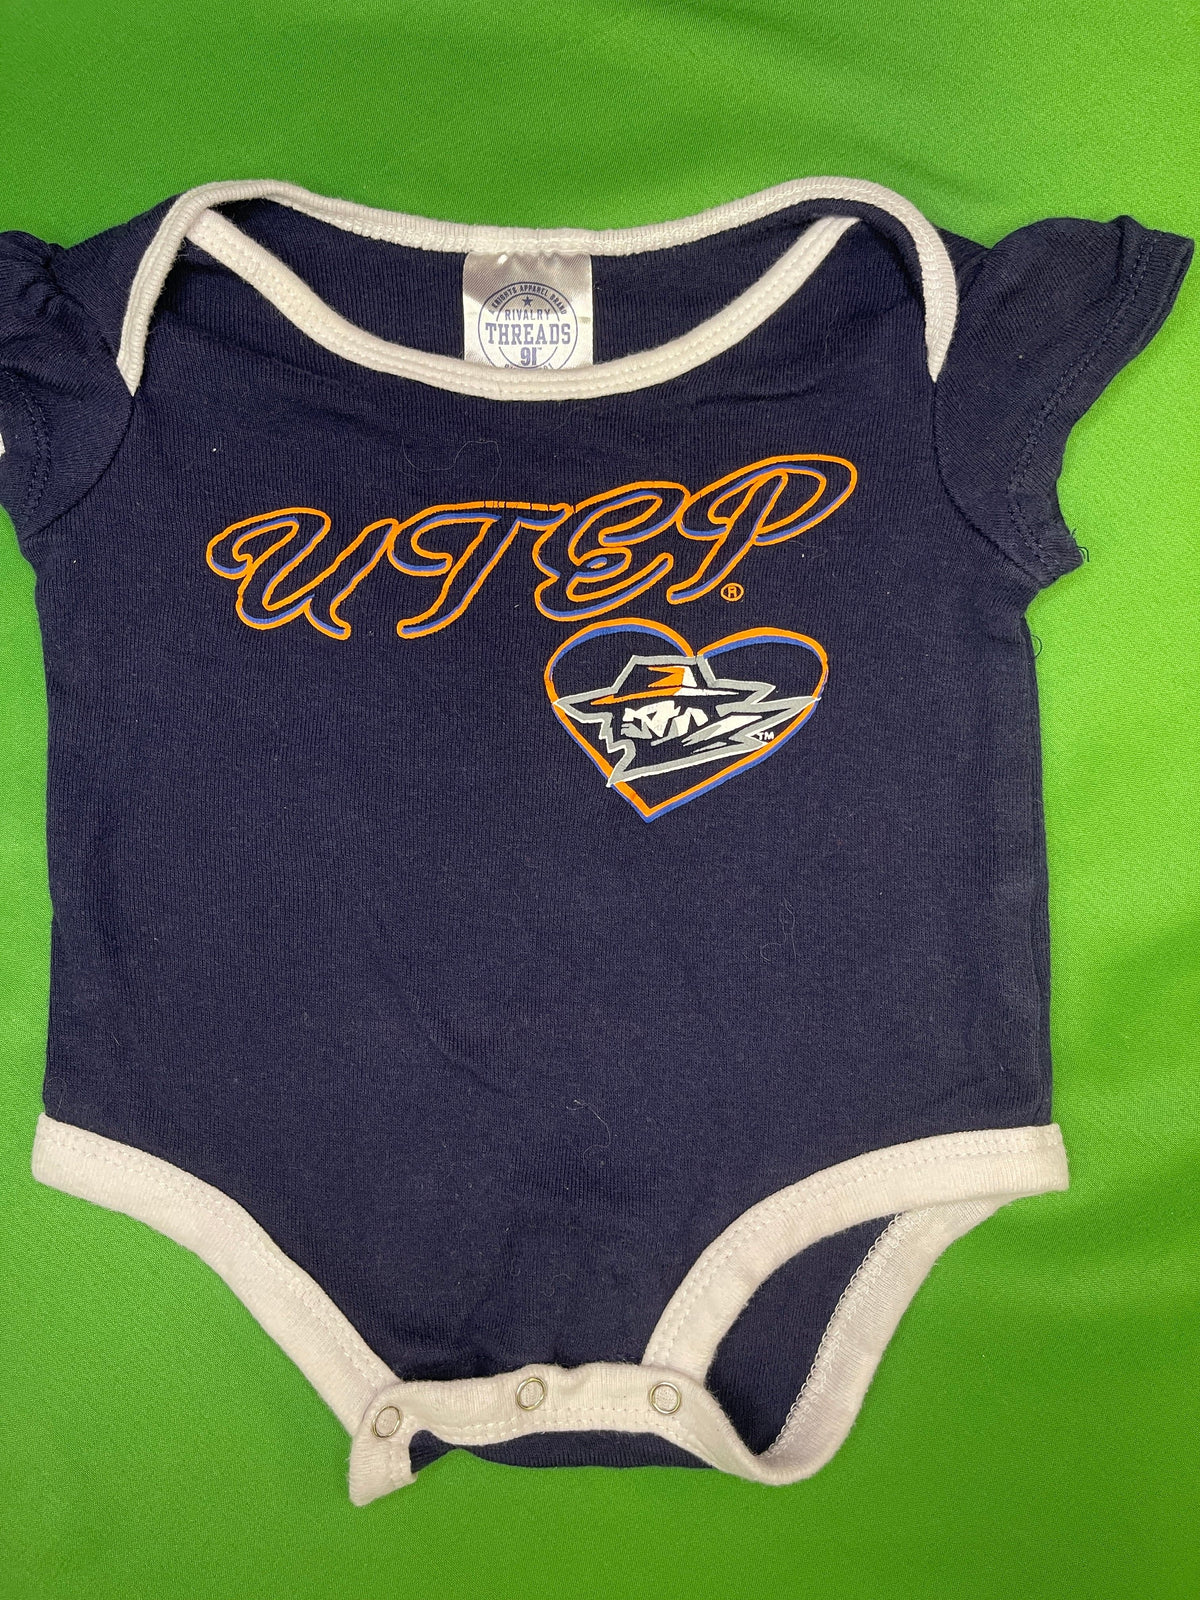 NCAA Texas El Paso UTEP Miners Baby Infant Bodysuit/Vest 6-9 Months